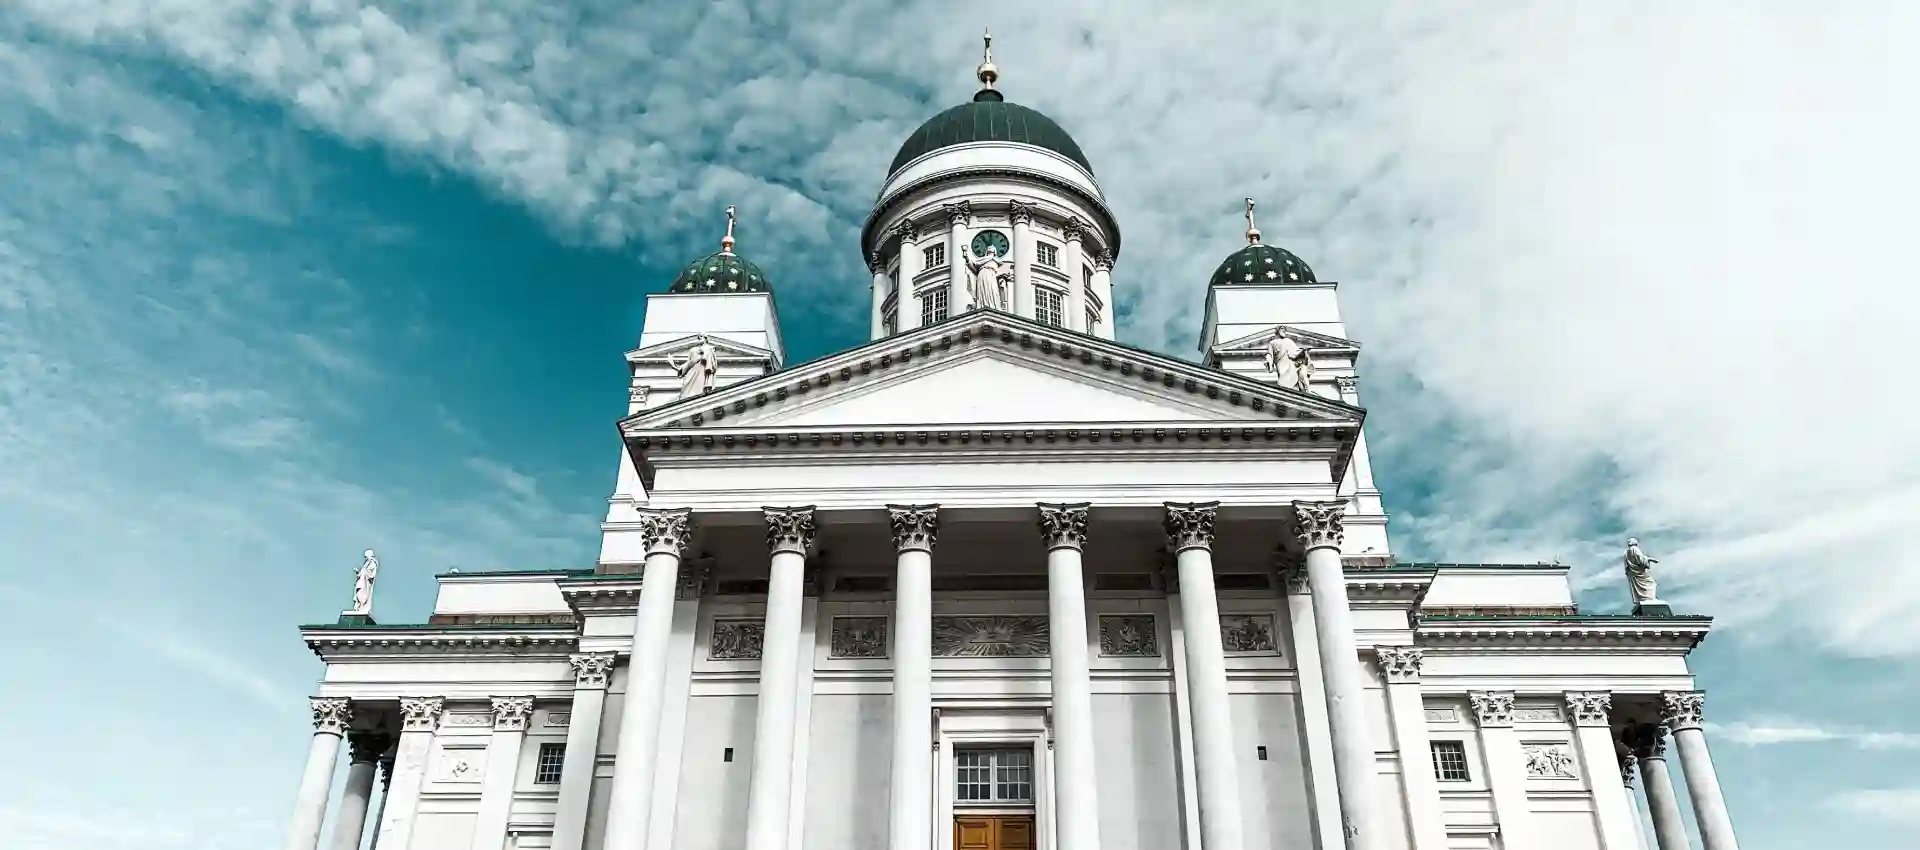 Helsinki-Katedrali.webp